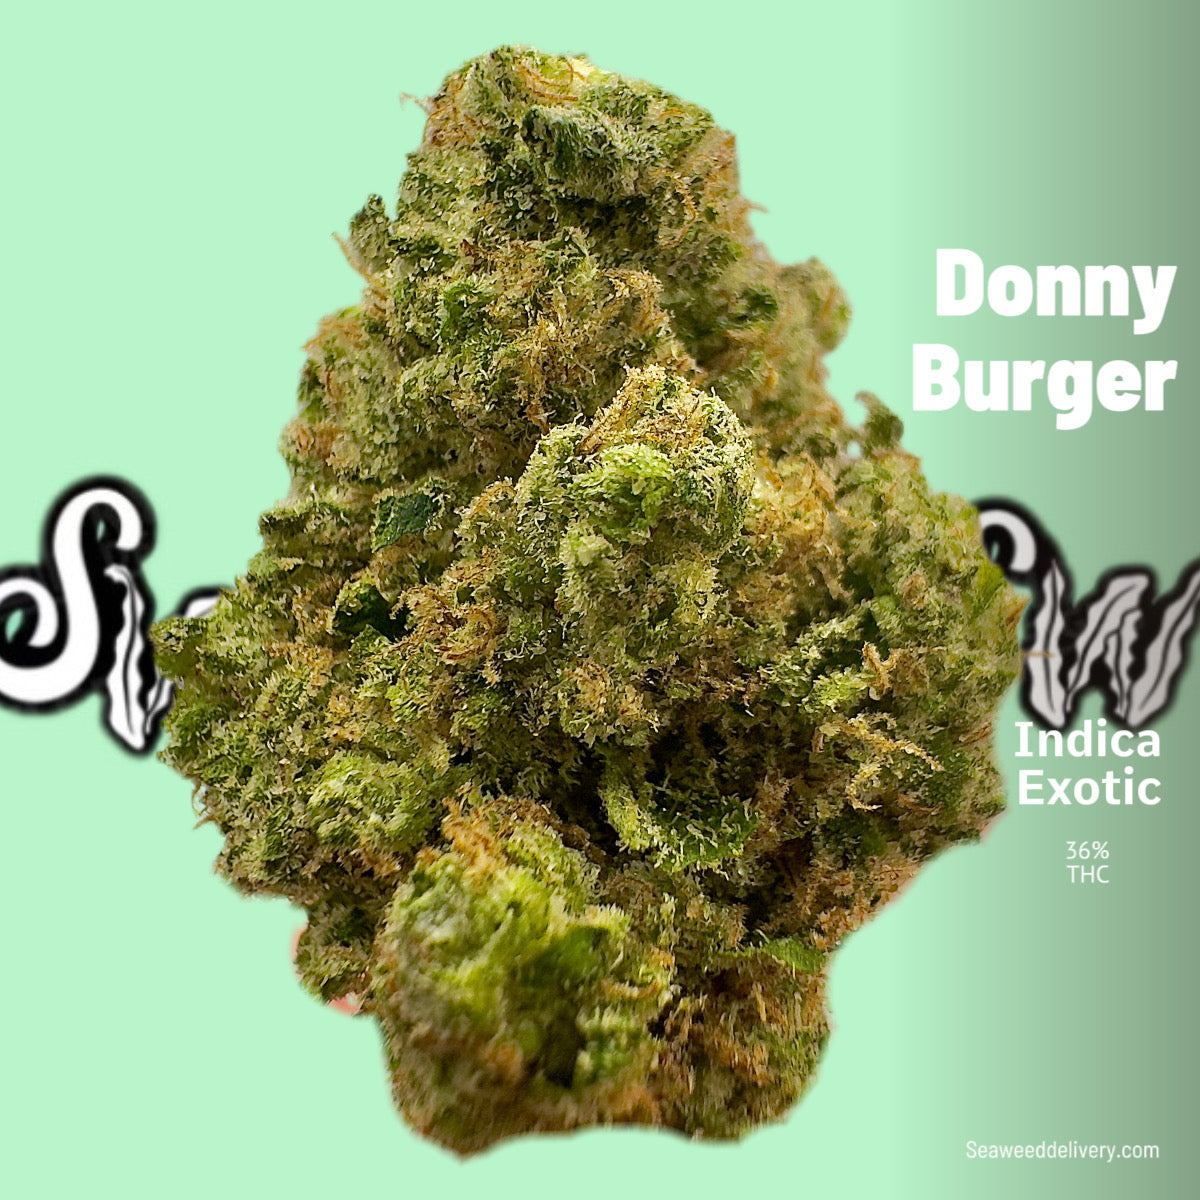 Donny Burger (Indica) Exotic